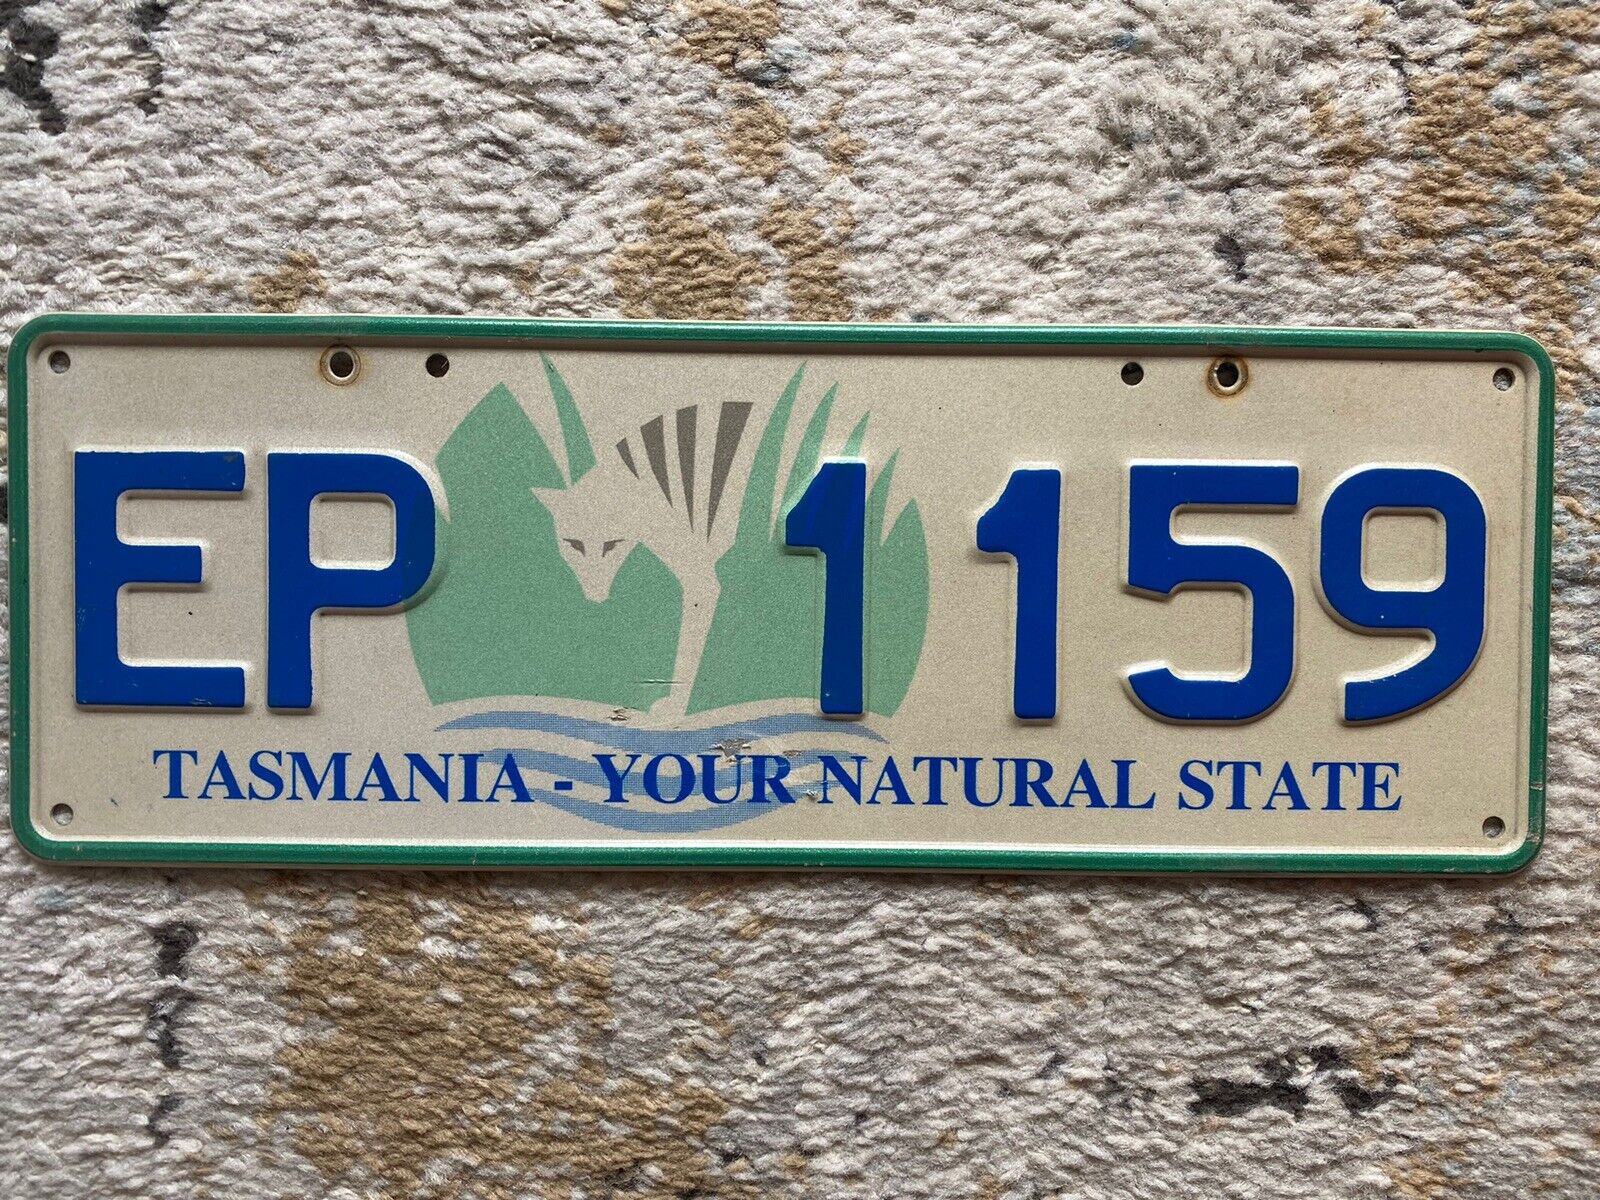 Australia 2017 TASMANIA - YOUR NATURAL STATE License Plate # EP-1159